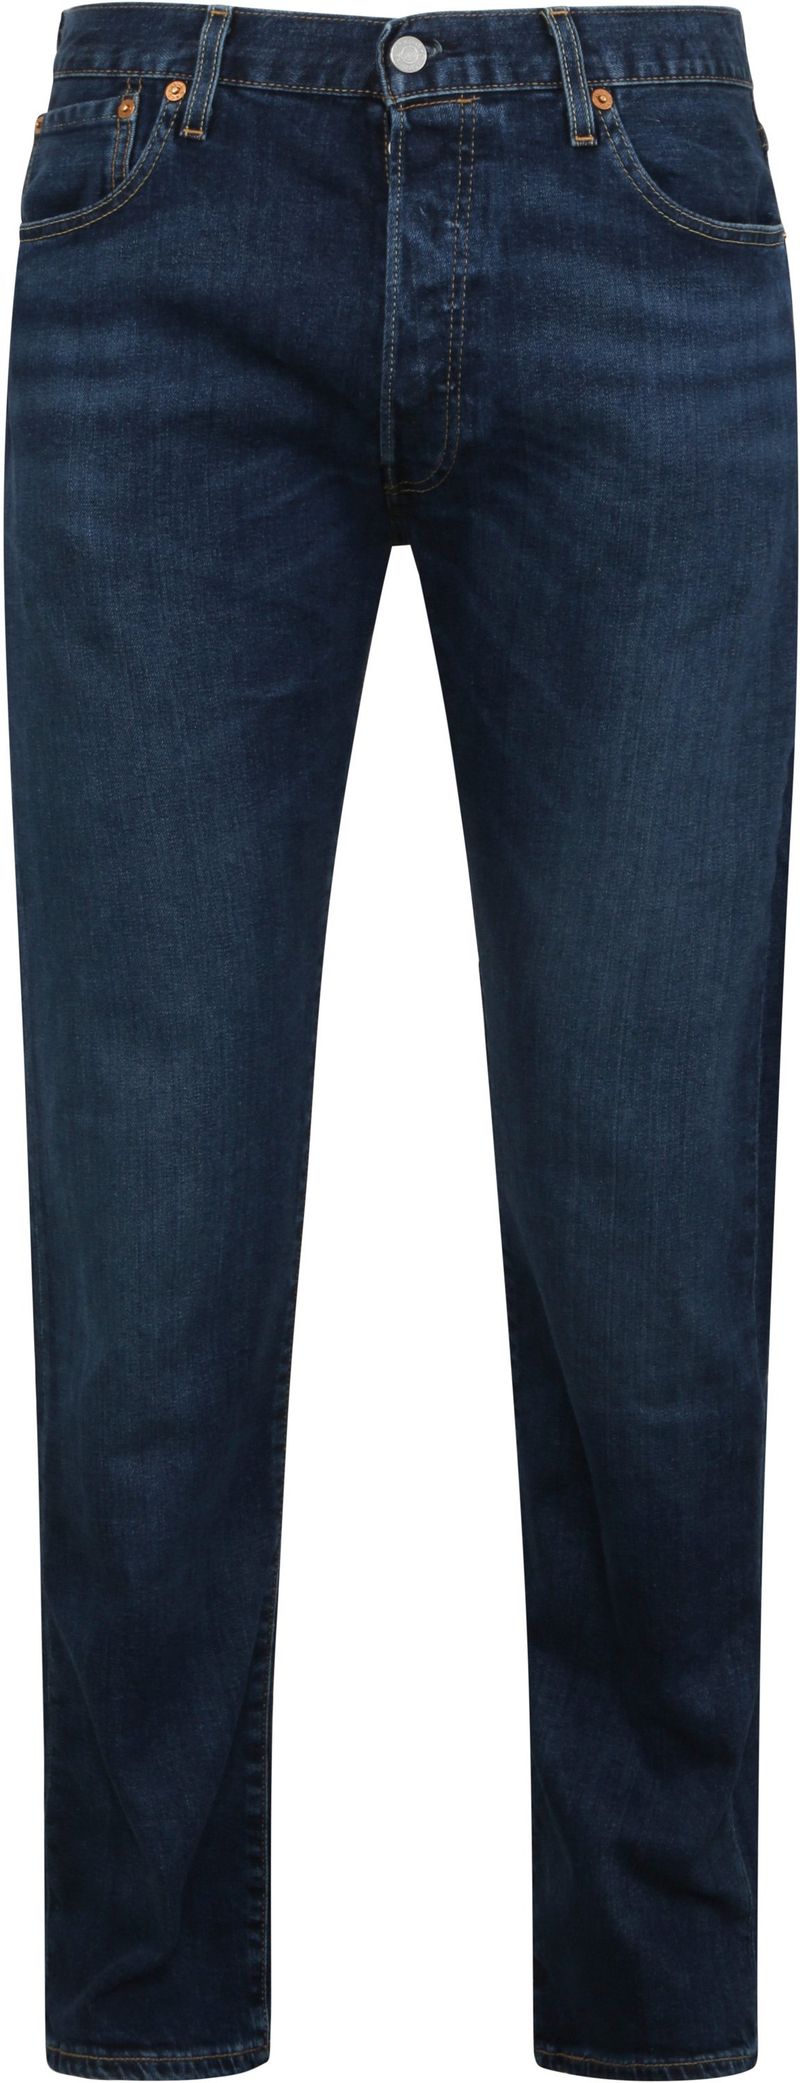 levi's jeans 501 original navy